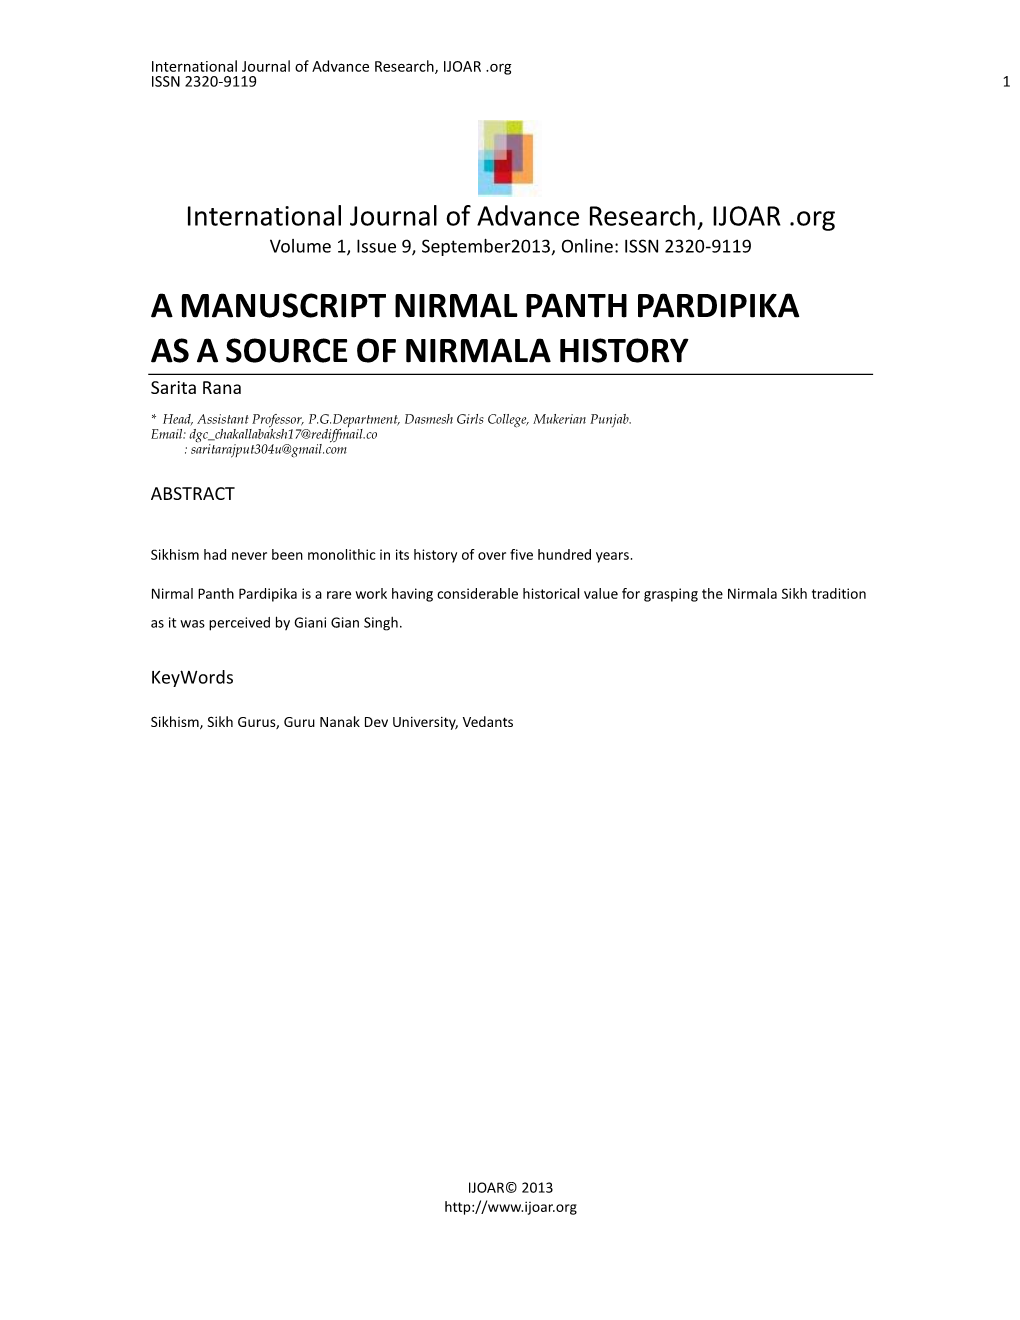 NIRMAL PANTH PARDIPIKA AS a SOURCE of NIRMALA HISTORY Sarita Rana